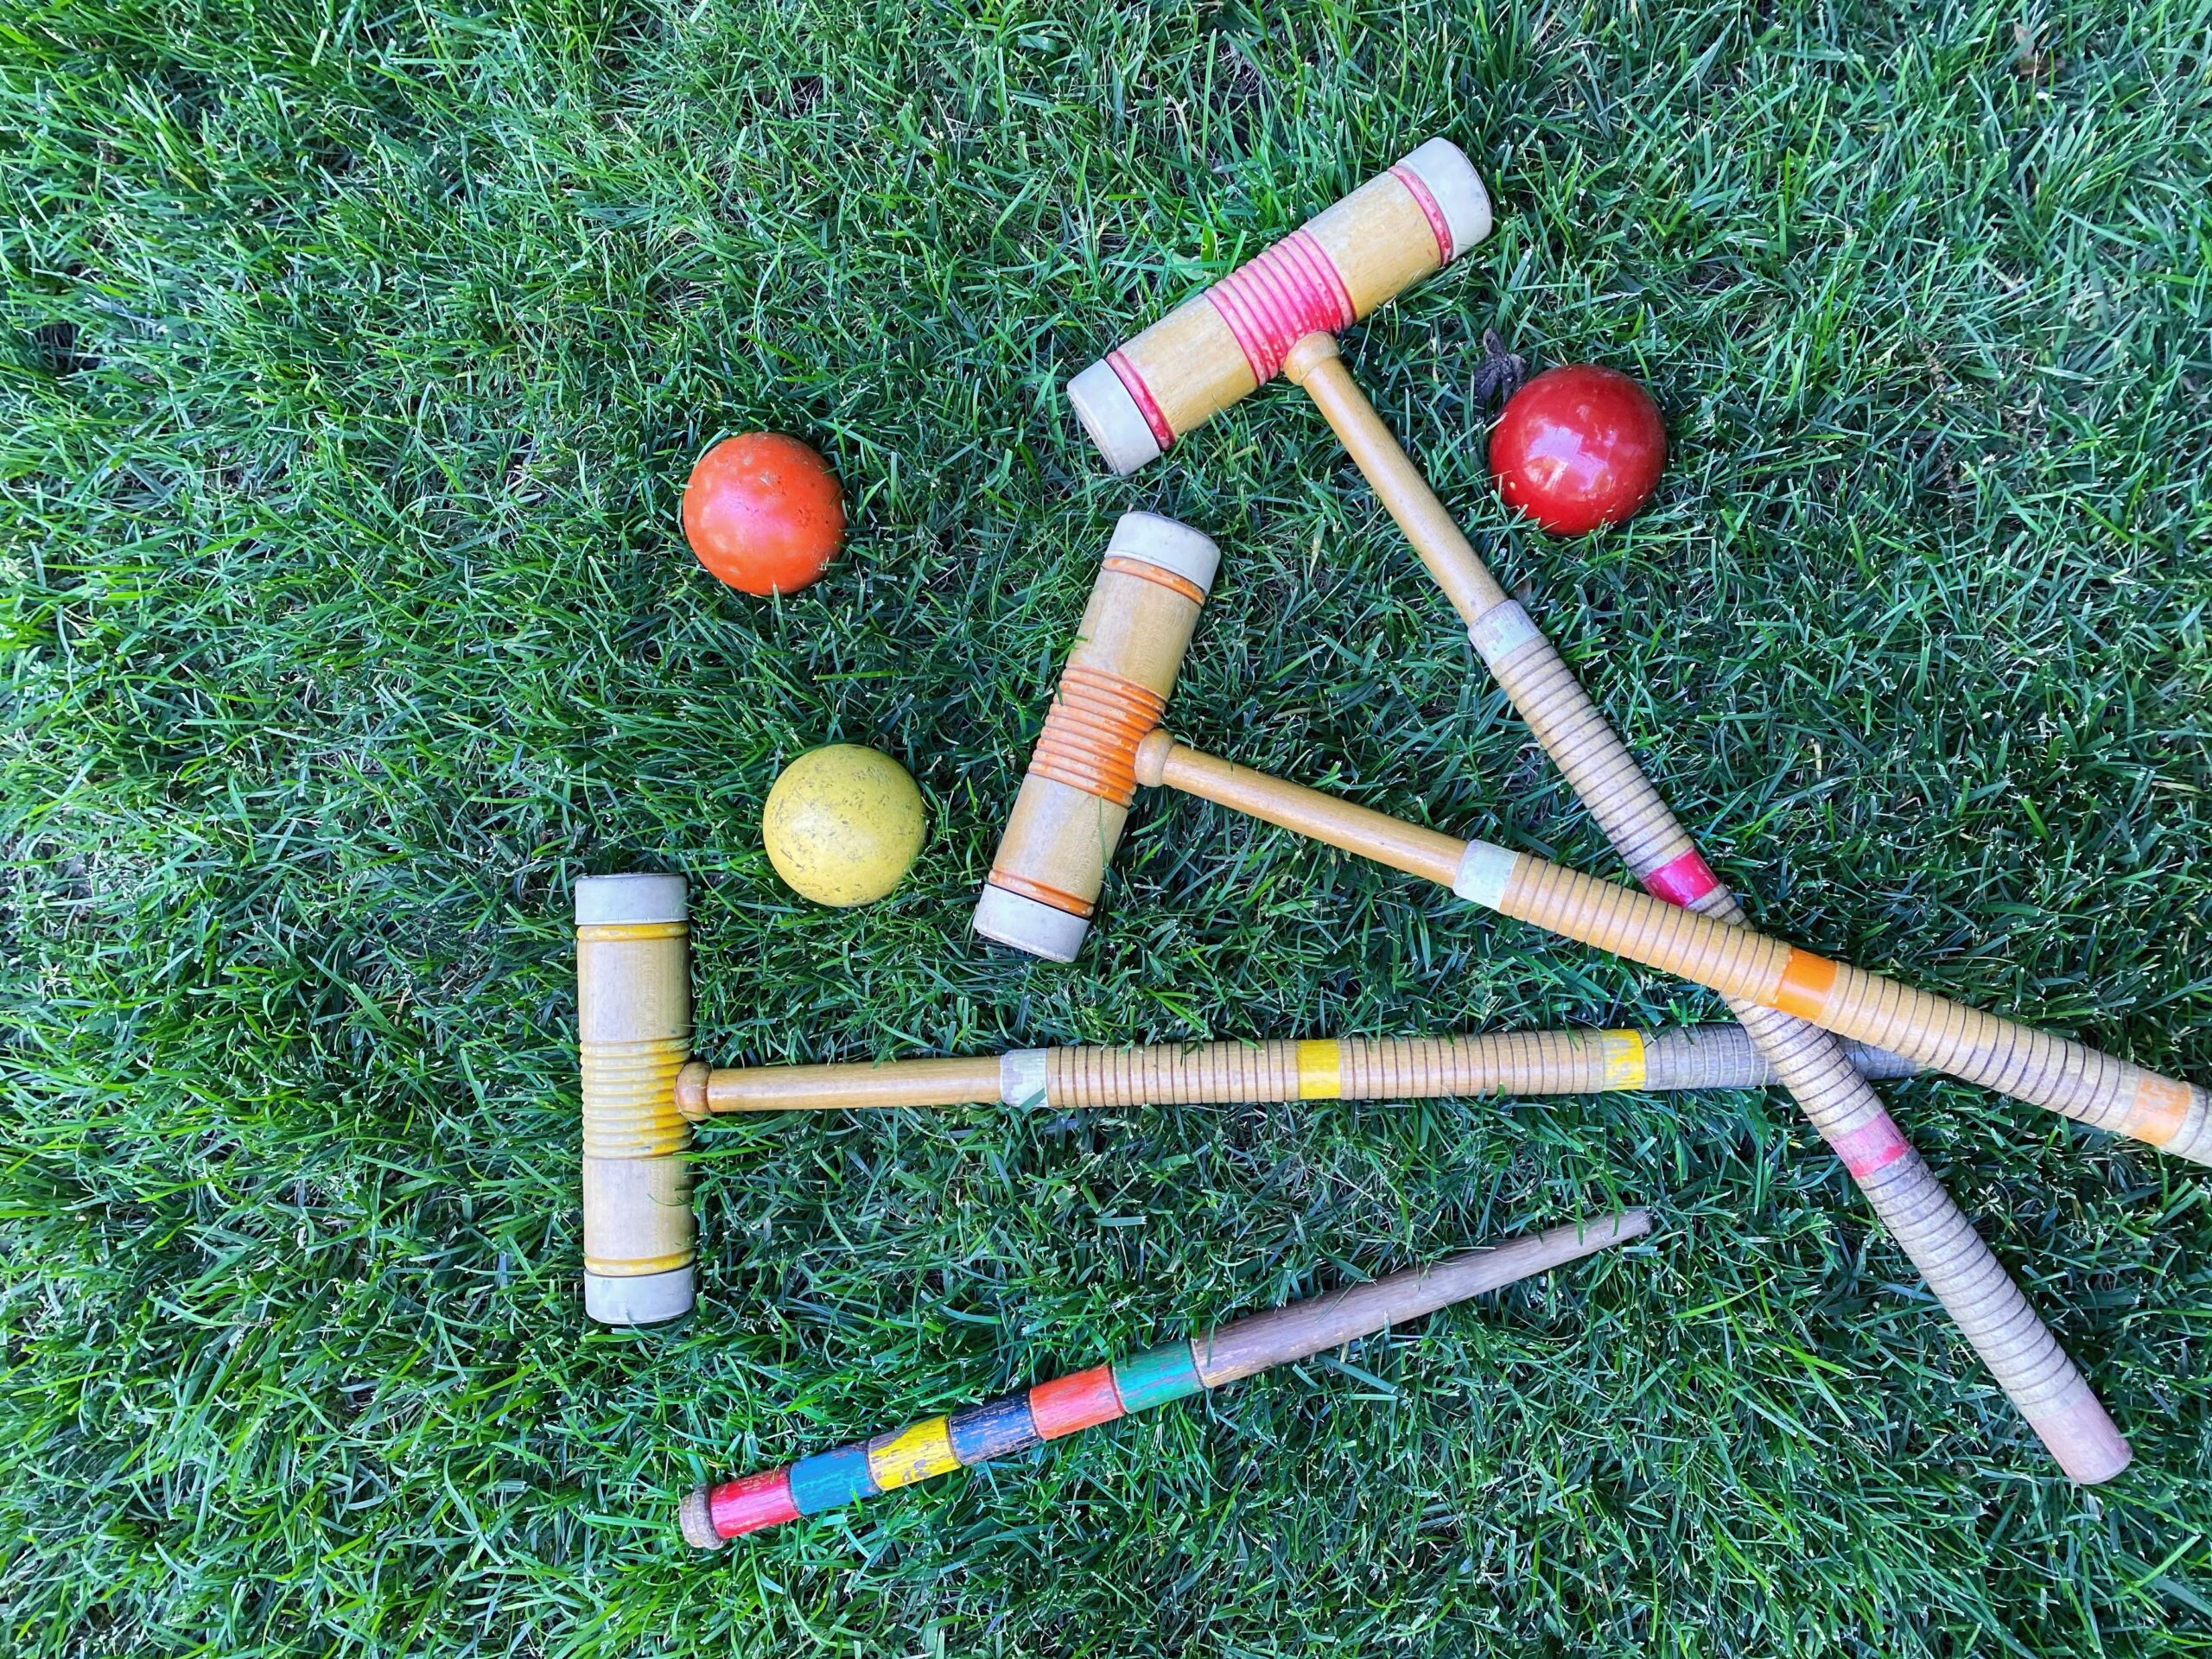 A vintage set of croquet mallets on a lawn.